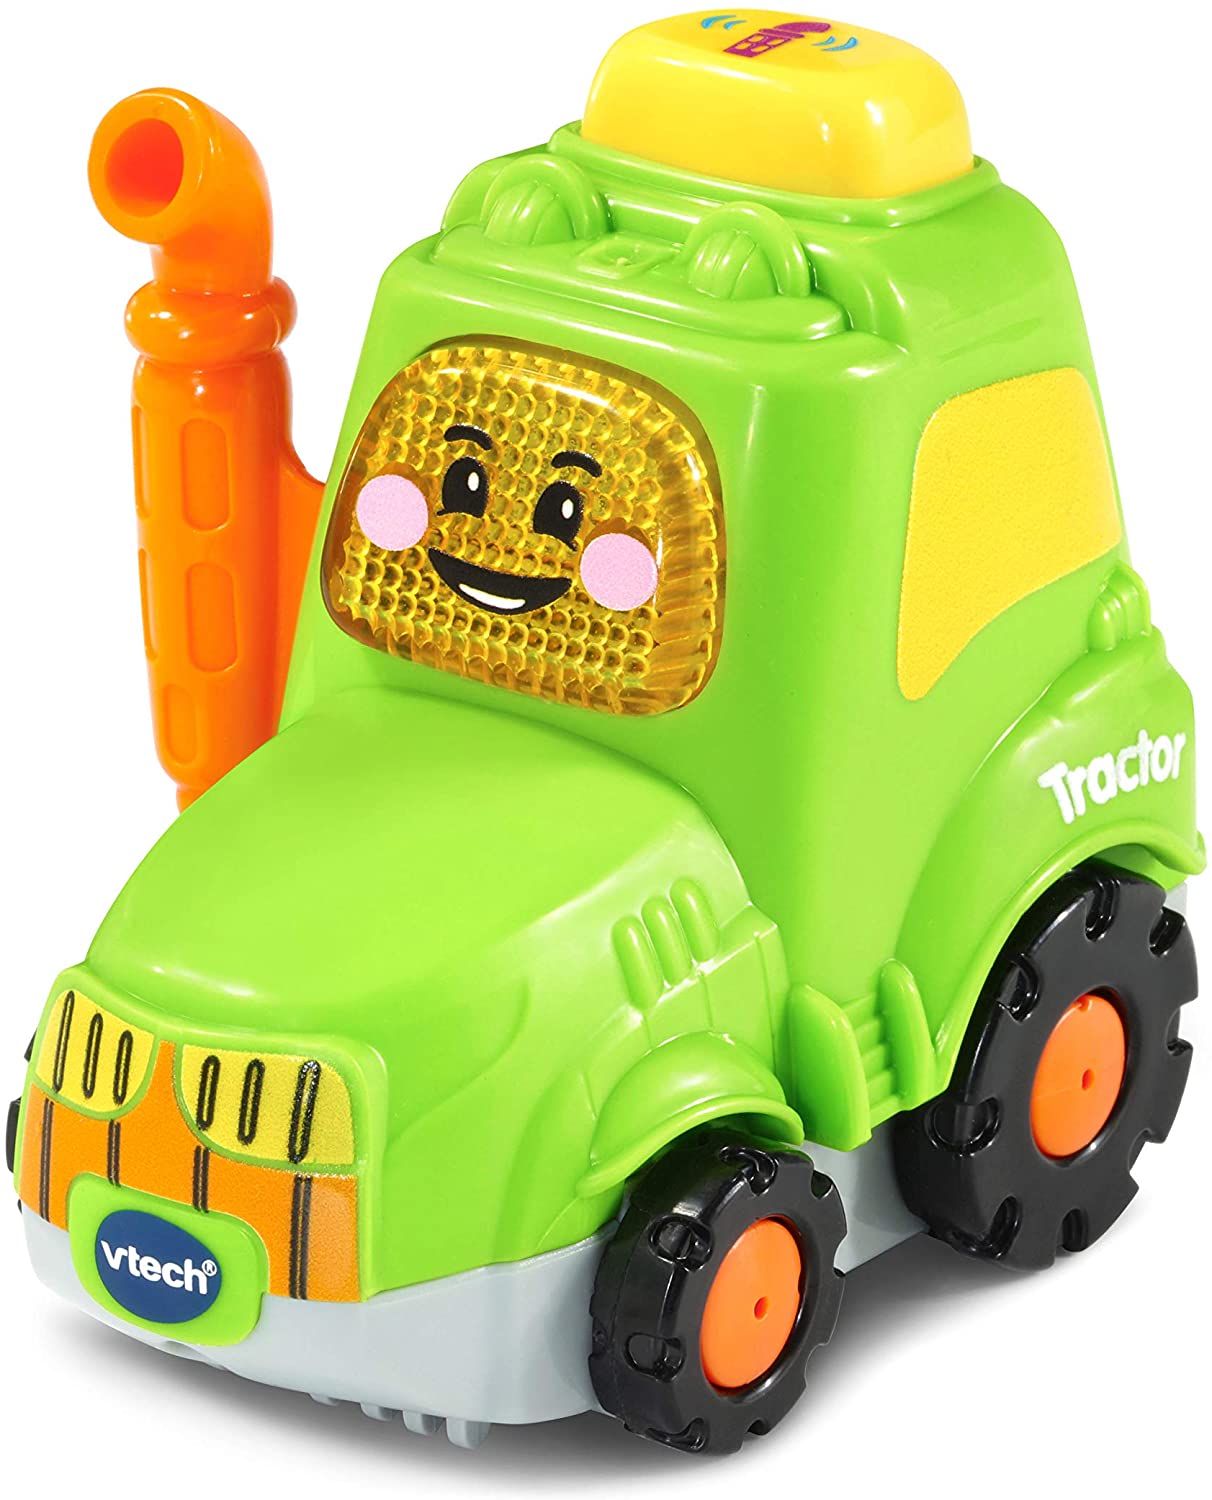 Vtech Toot Toot Tractor (80-514303)